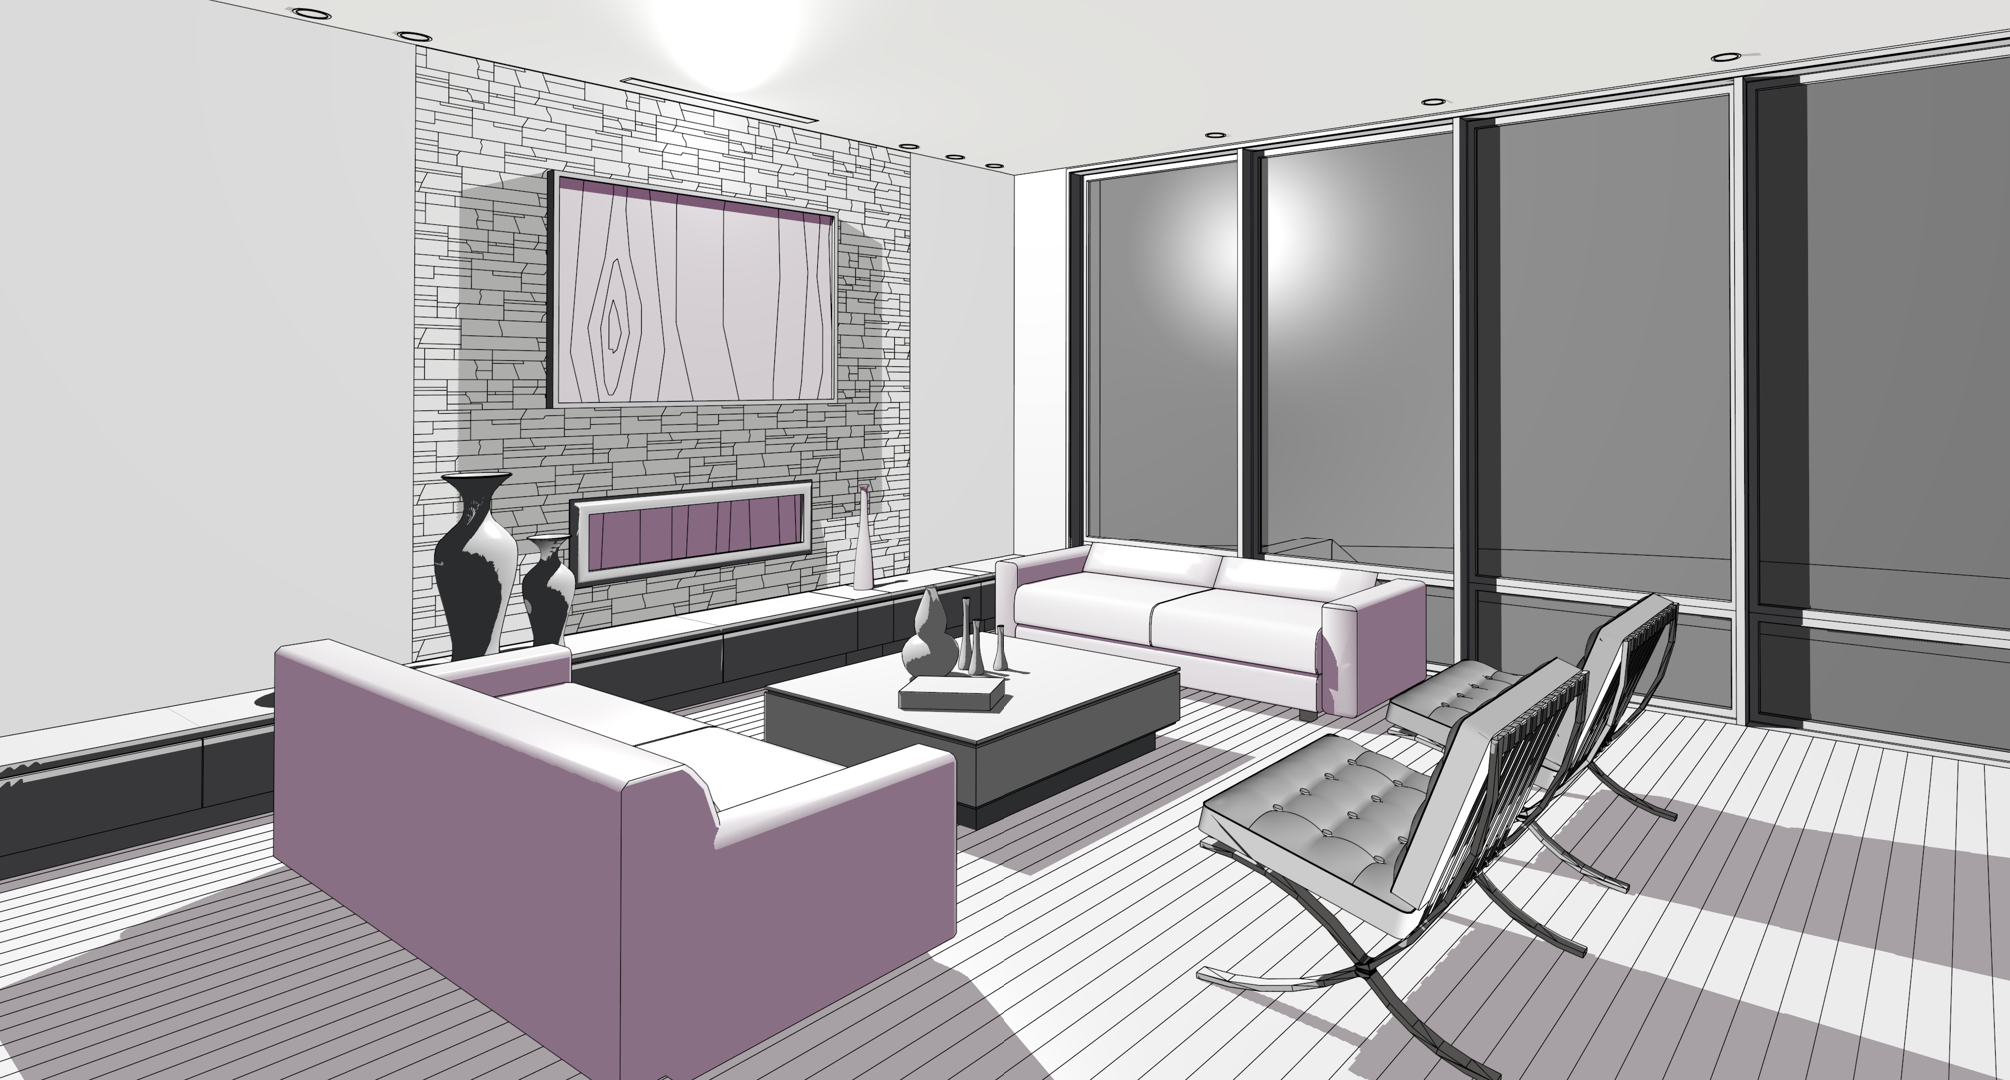  Chief Architect Home Designer Suite 2014 with Simple Decor